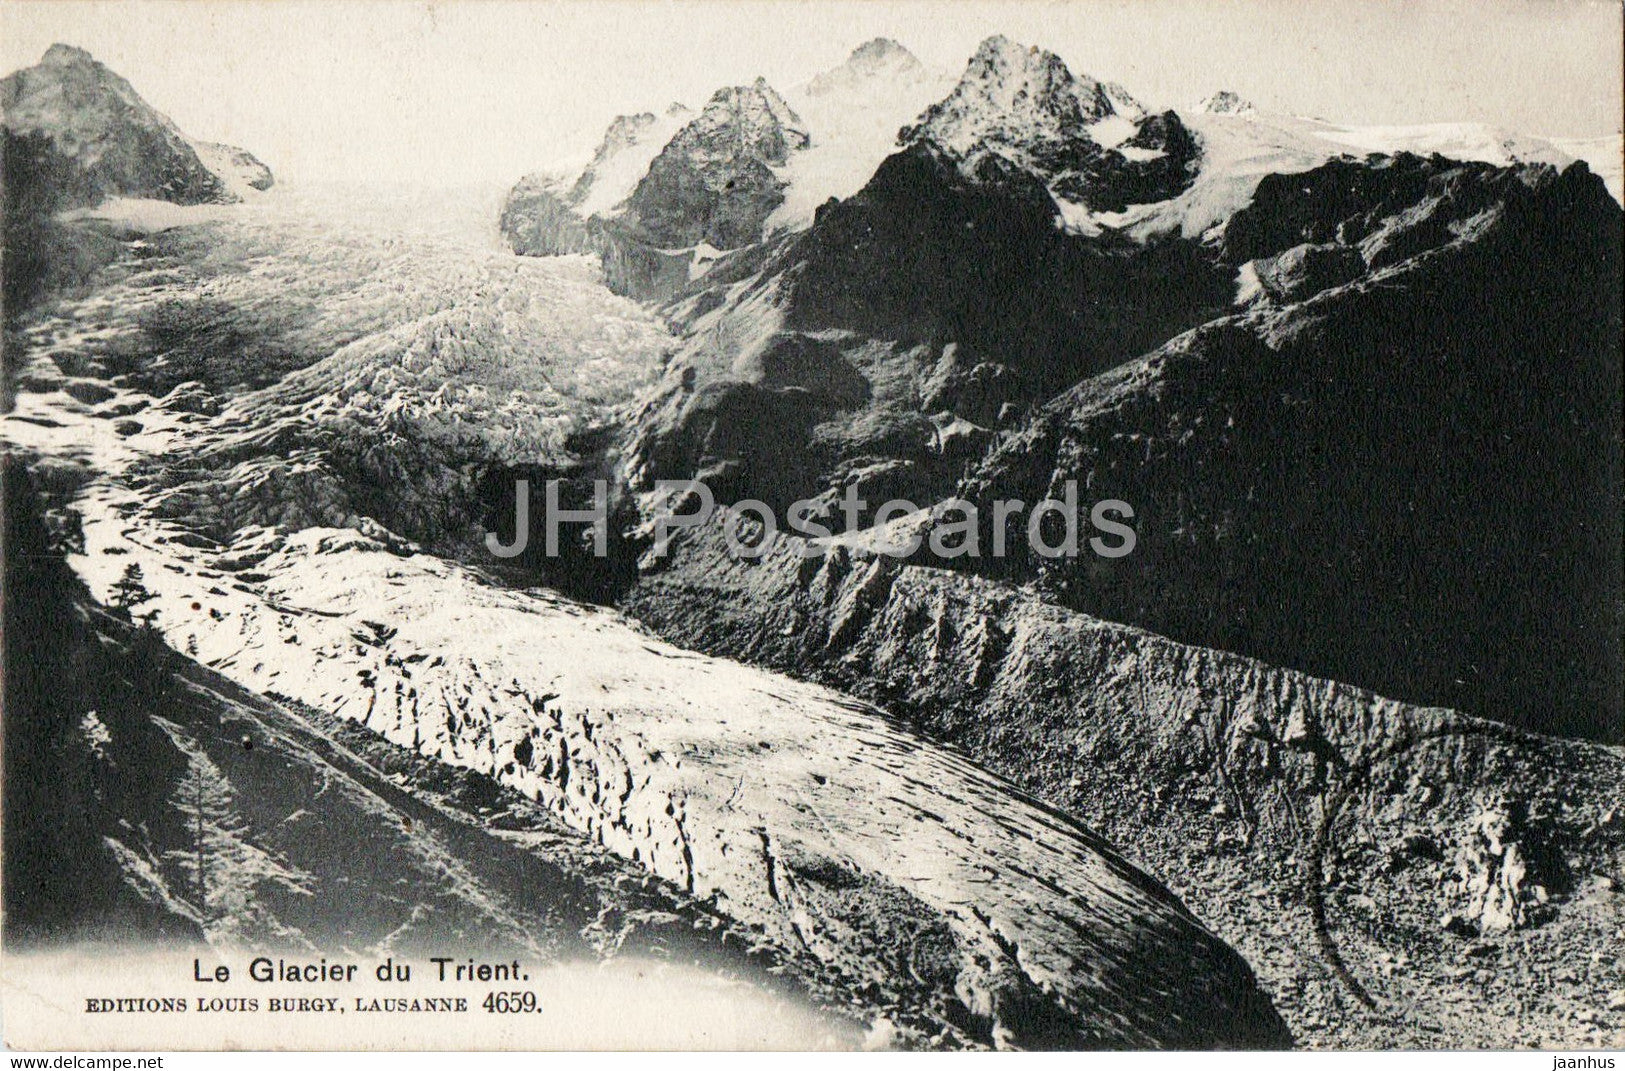 Le Glacier du Trient - 4659 - old postcard - 1908 - Switzerland - used - JH Postcards